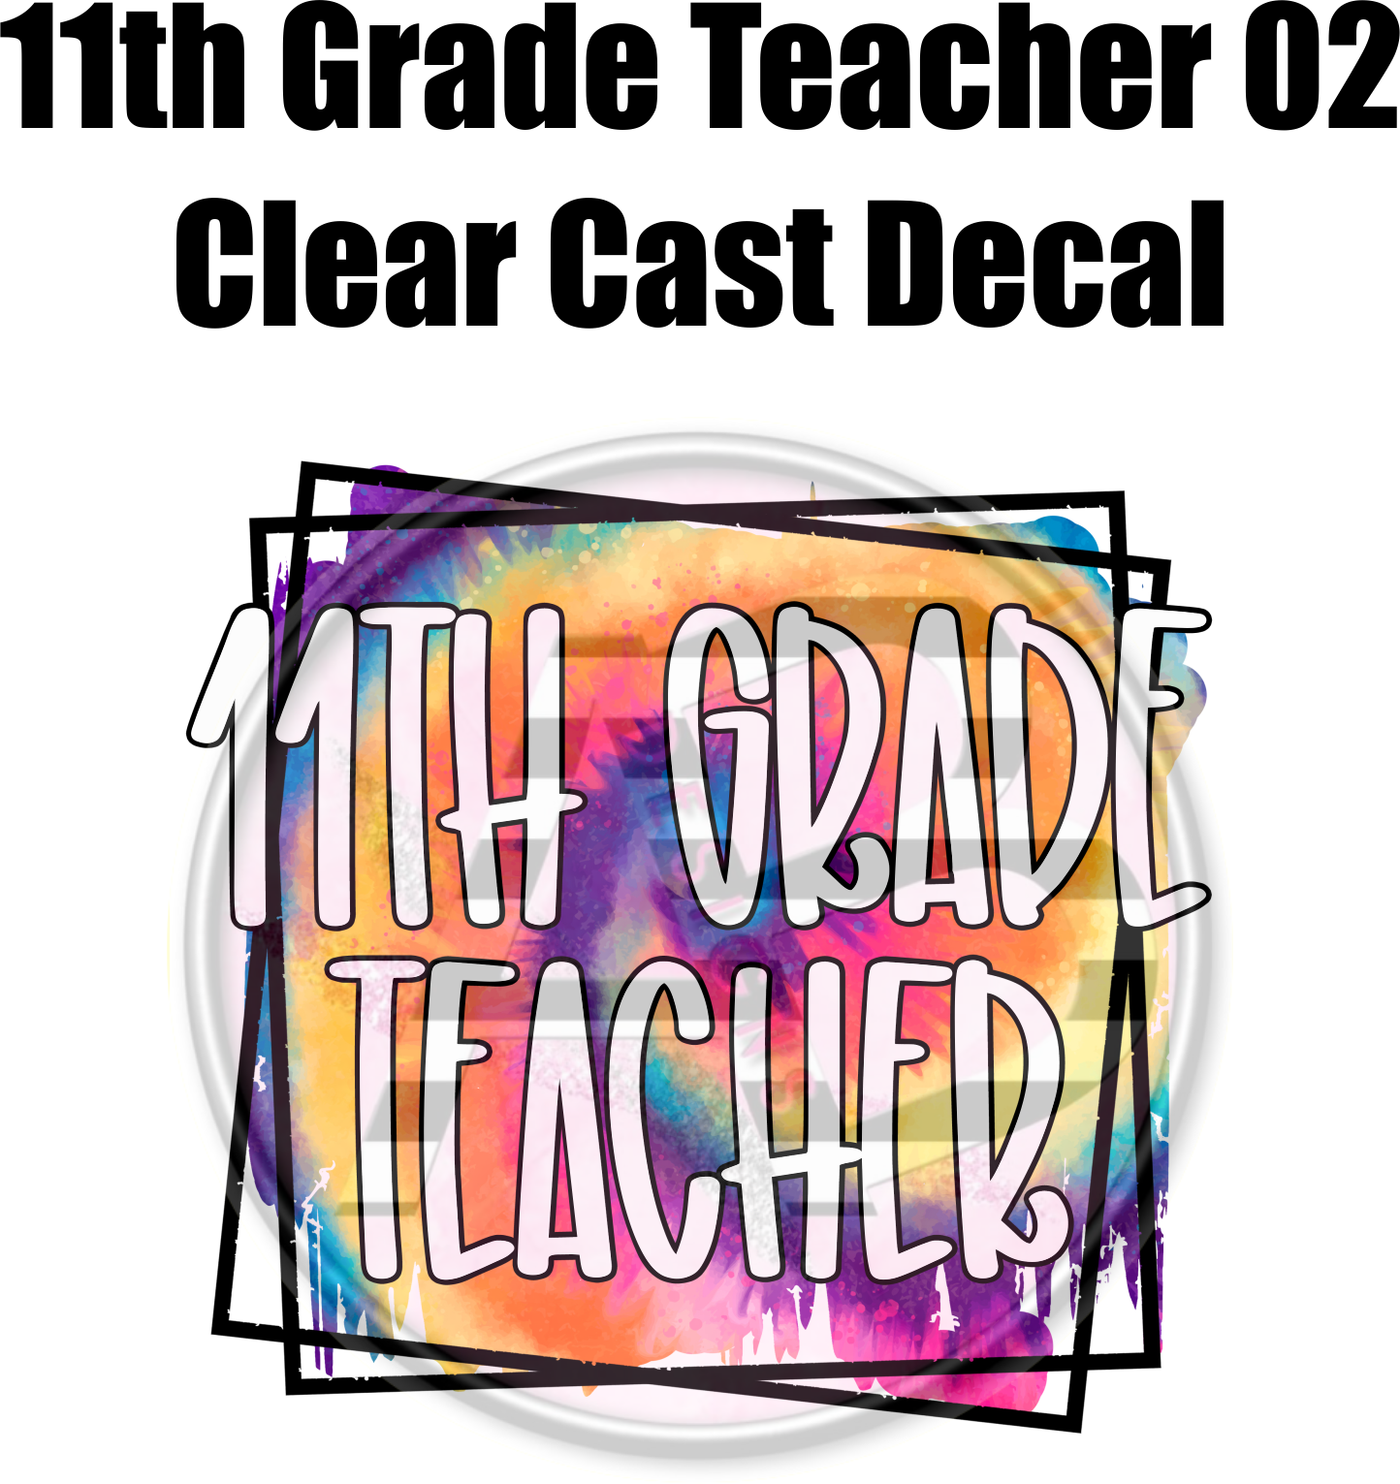 11th Grade Teacher 02 - Clear Cast Decal - 108